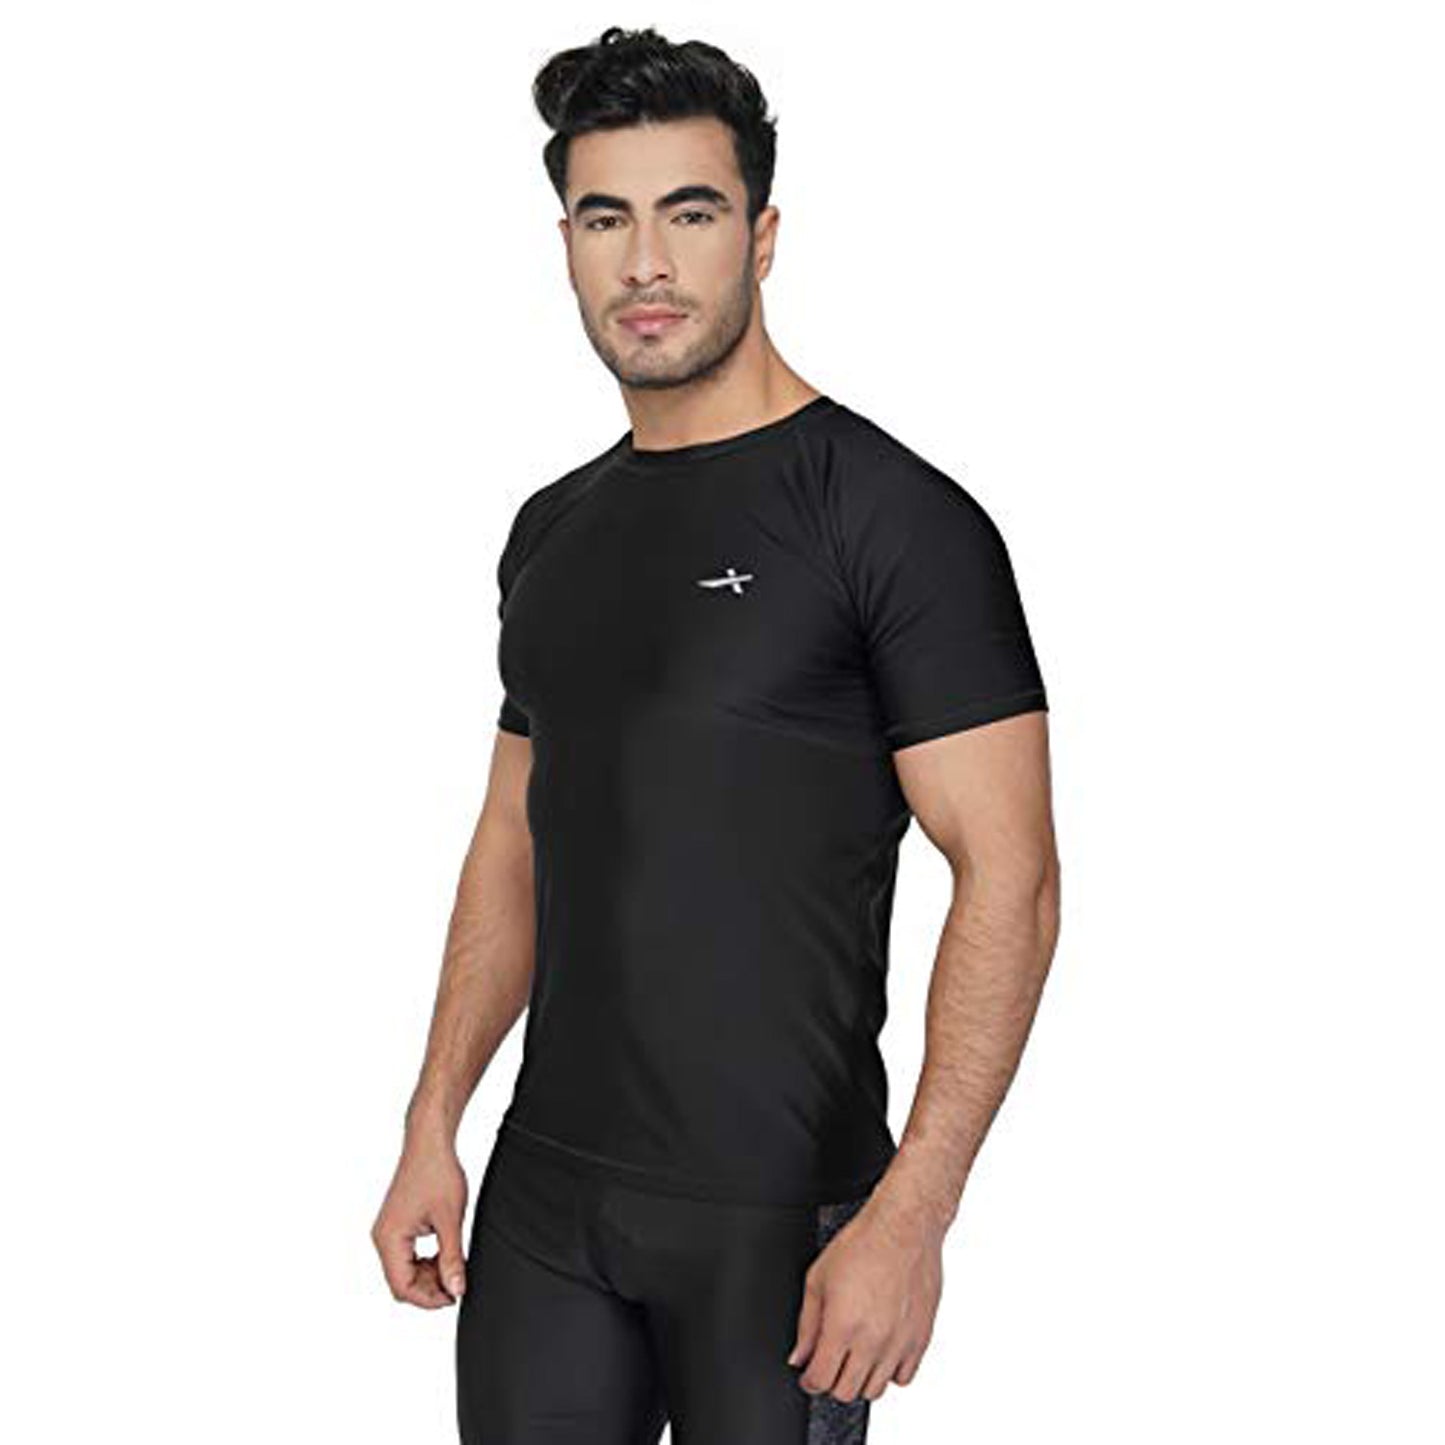 Vector X VTD-021 Men's Skin Fit T-Shirt , Black - Best Price online Prokicksports.com